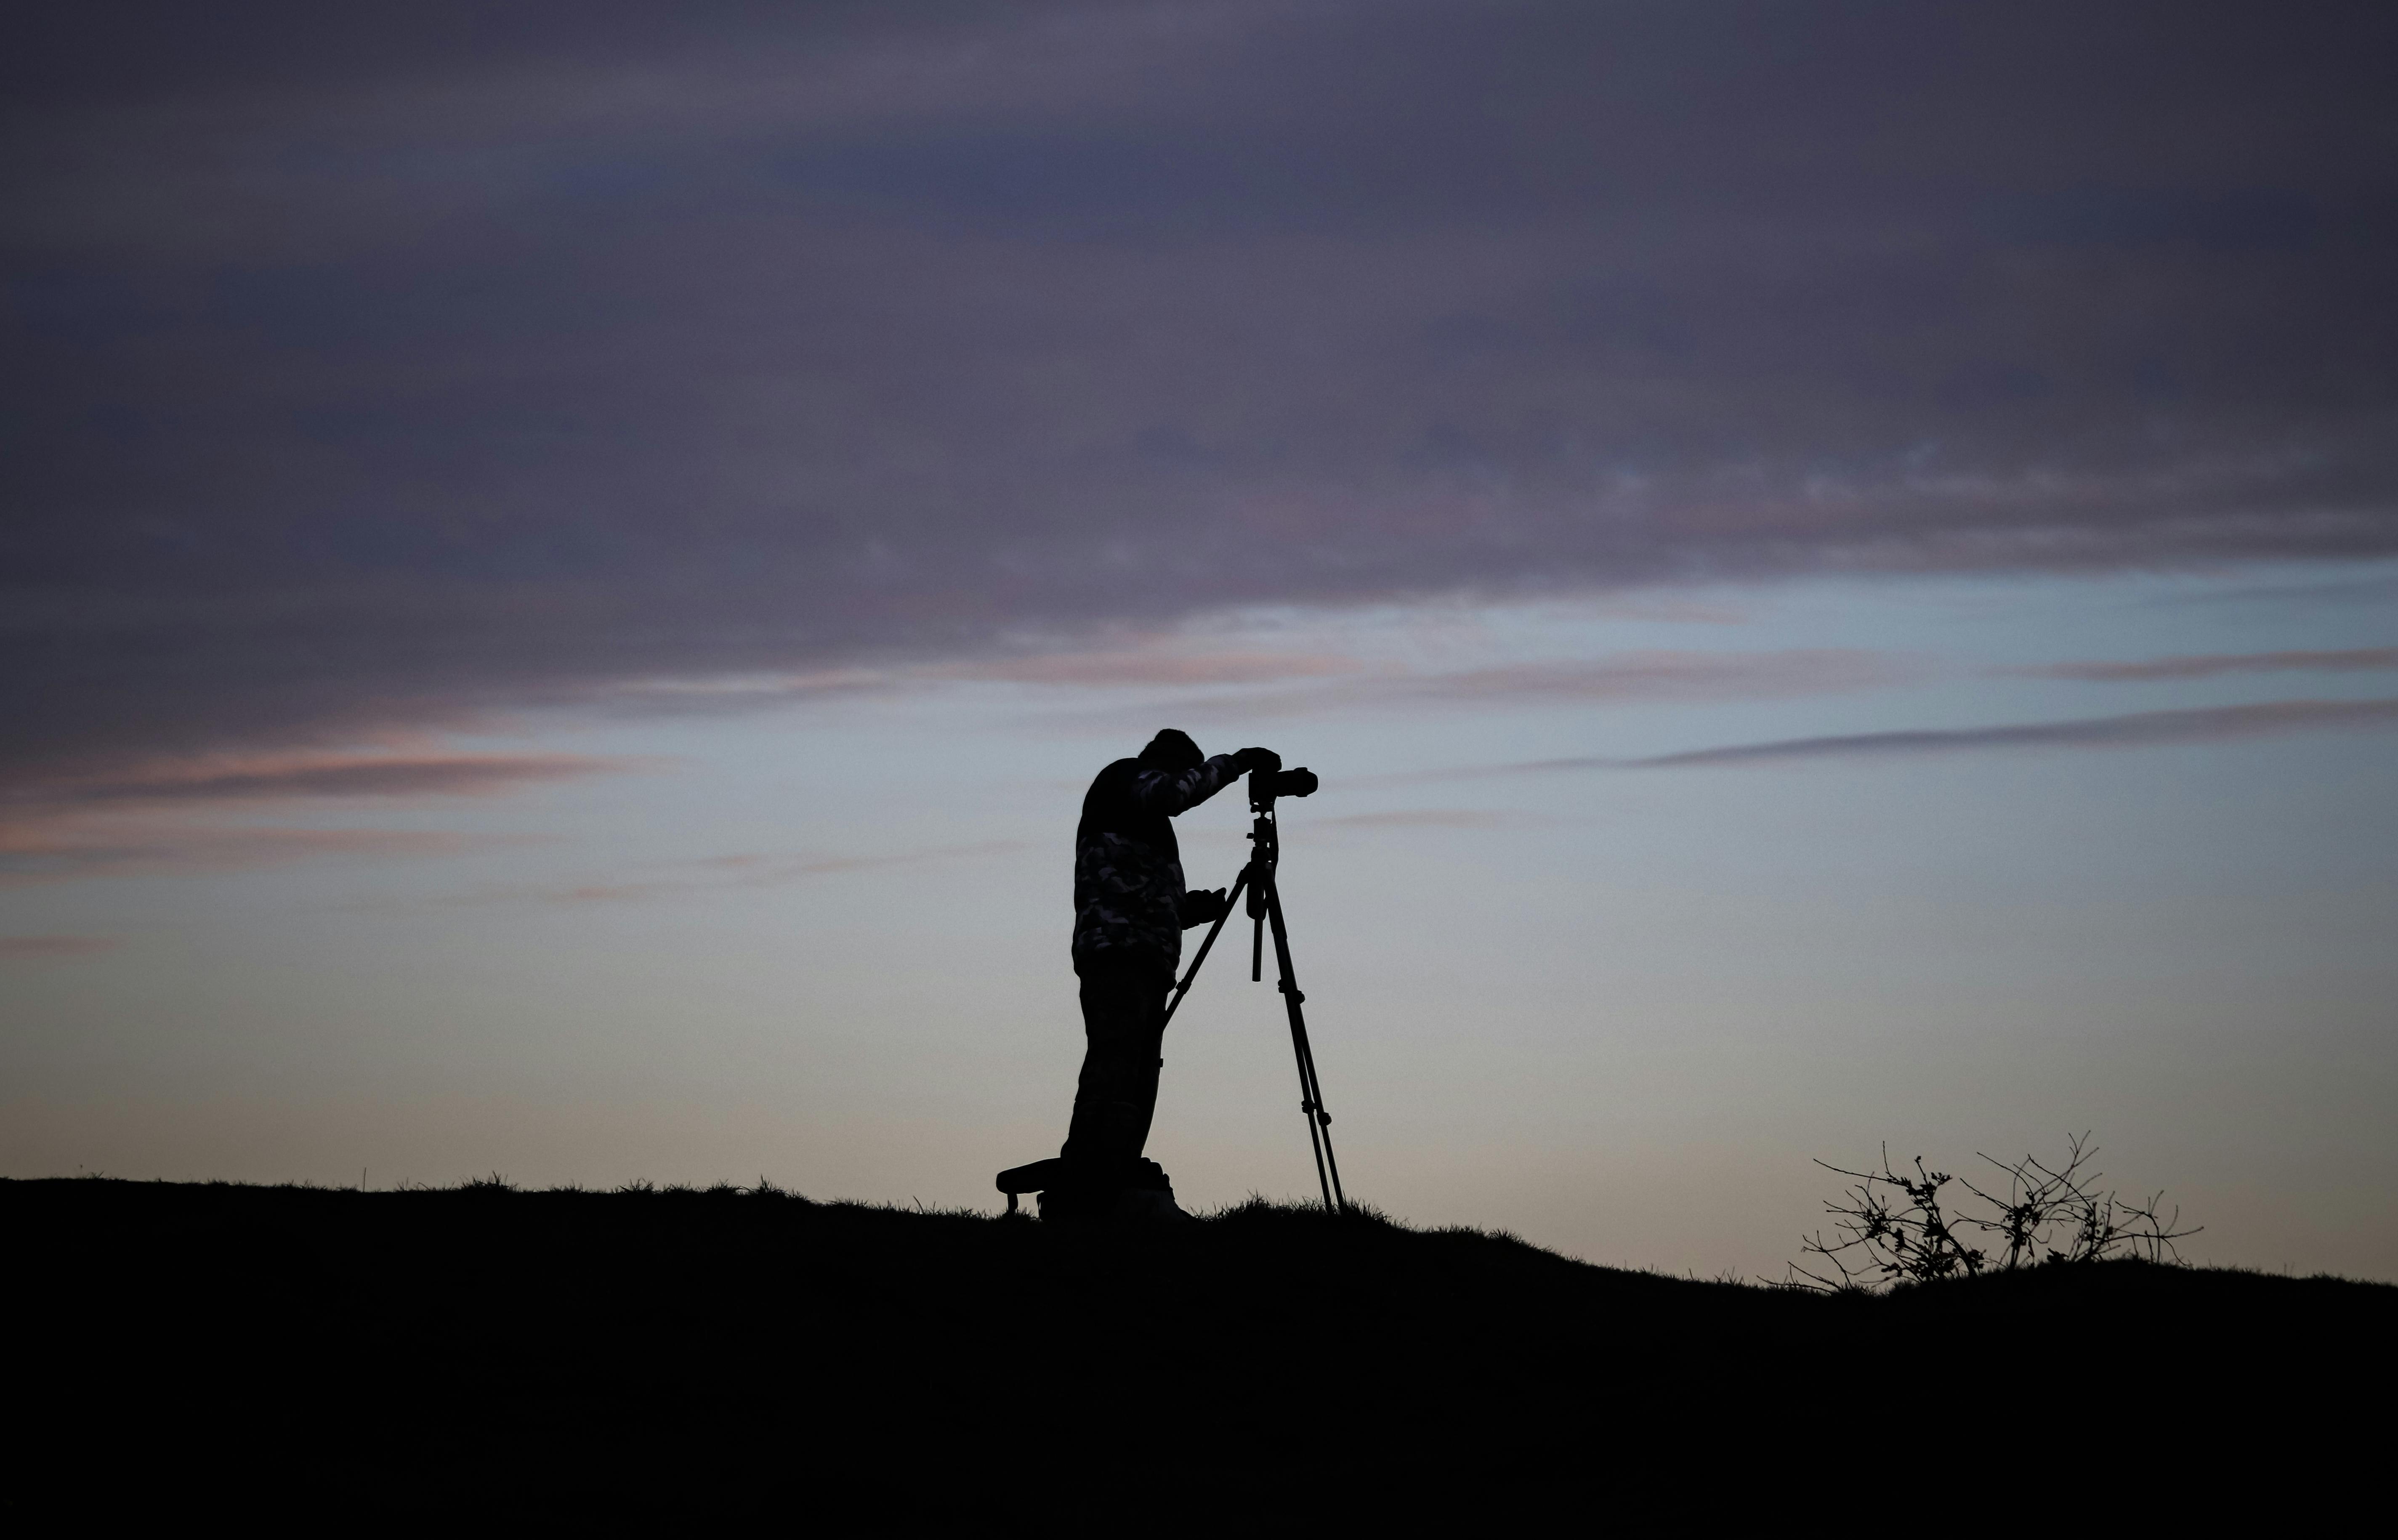 photographer tripod silhouette